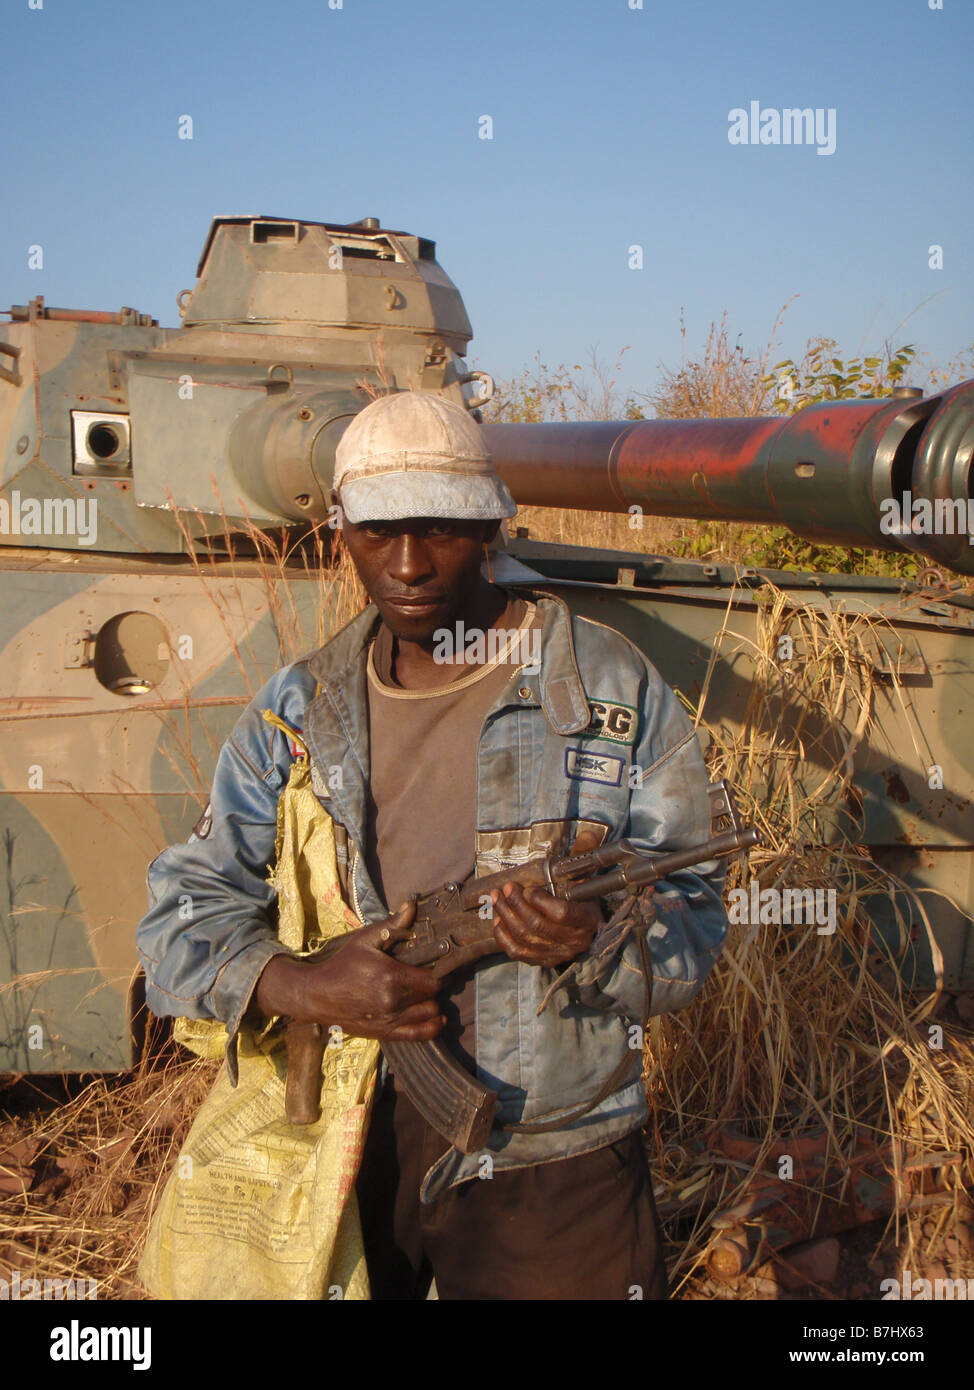 Armed Congolese man with AK47 automatic rifle with abandoned tank behind him near Lake Mweru Democratic Republic of Congo Stock Photo